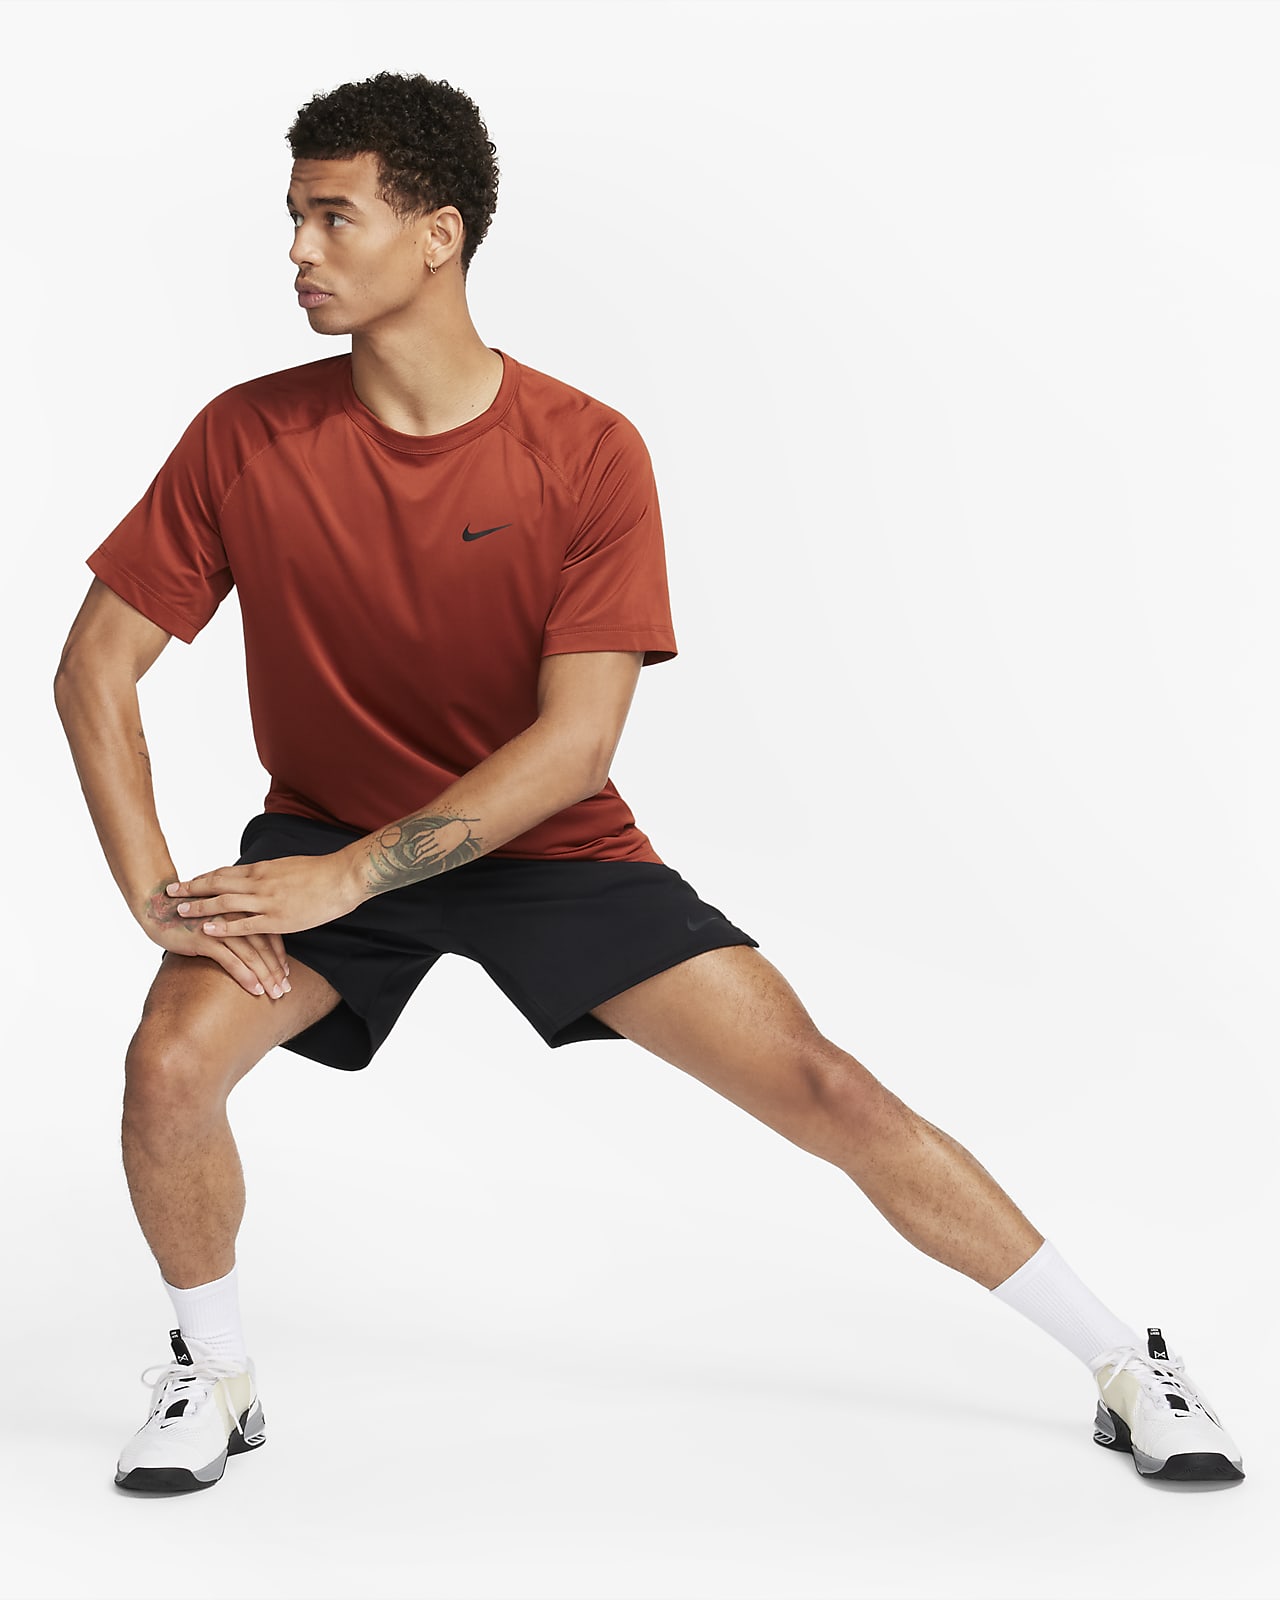 Nike Ready Men's Dri-FIT Fitness Top. Nike.com